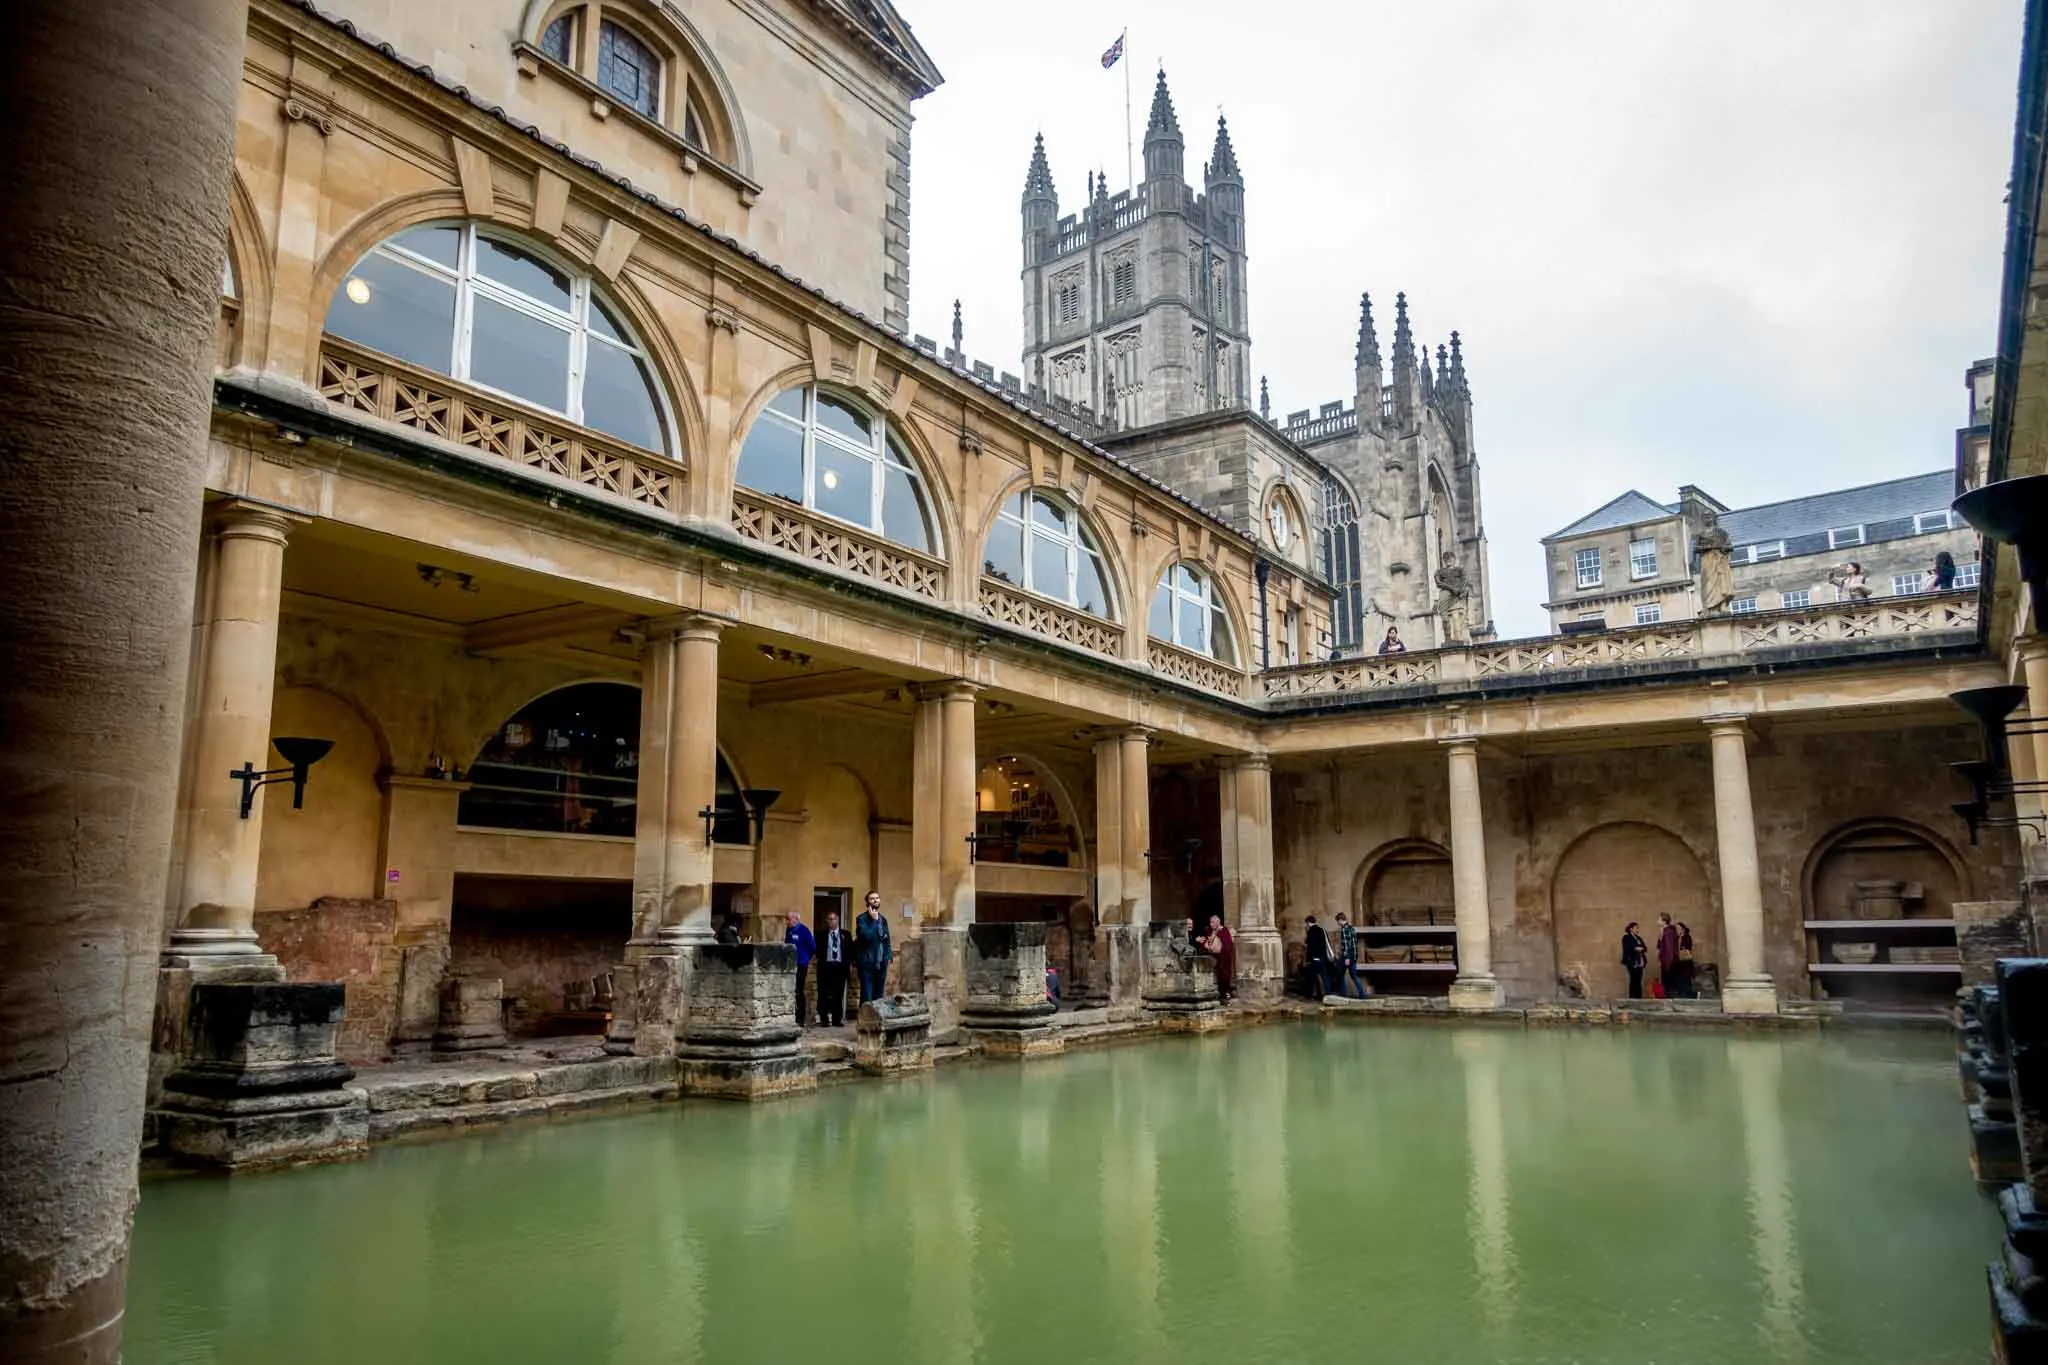 The Roman Baths in the city of Bath, England